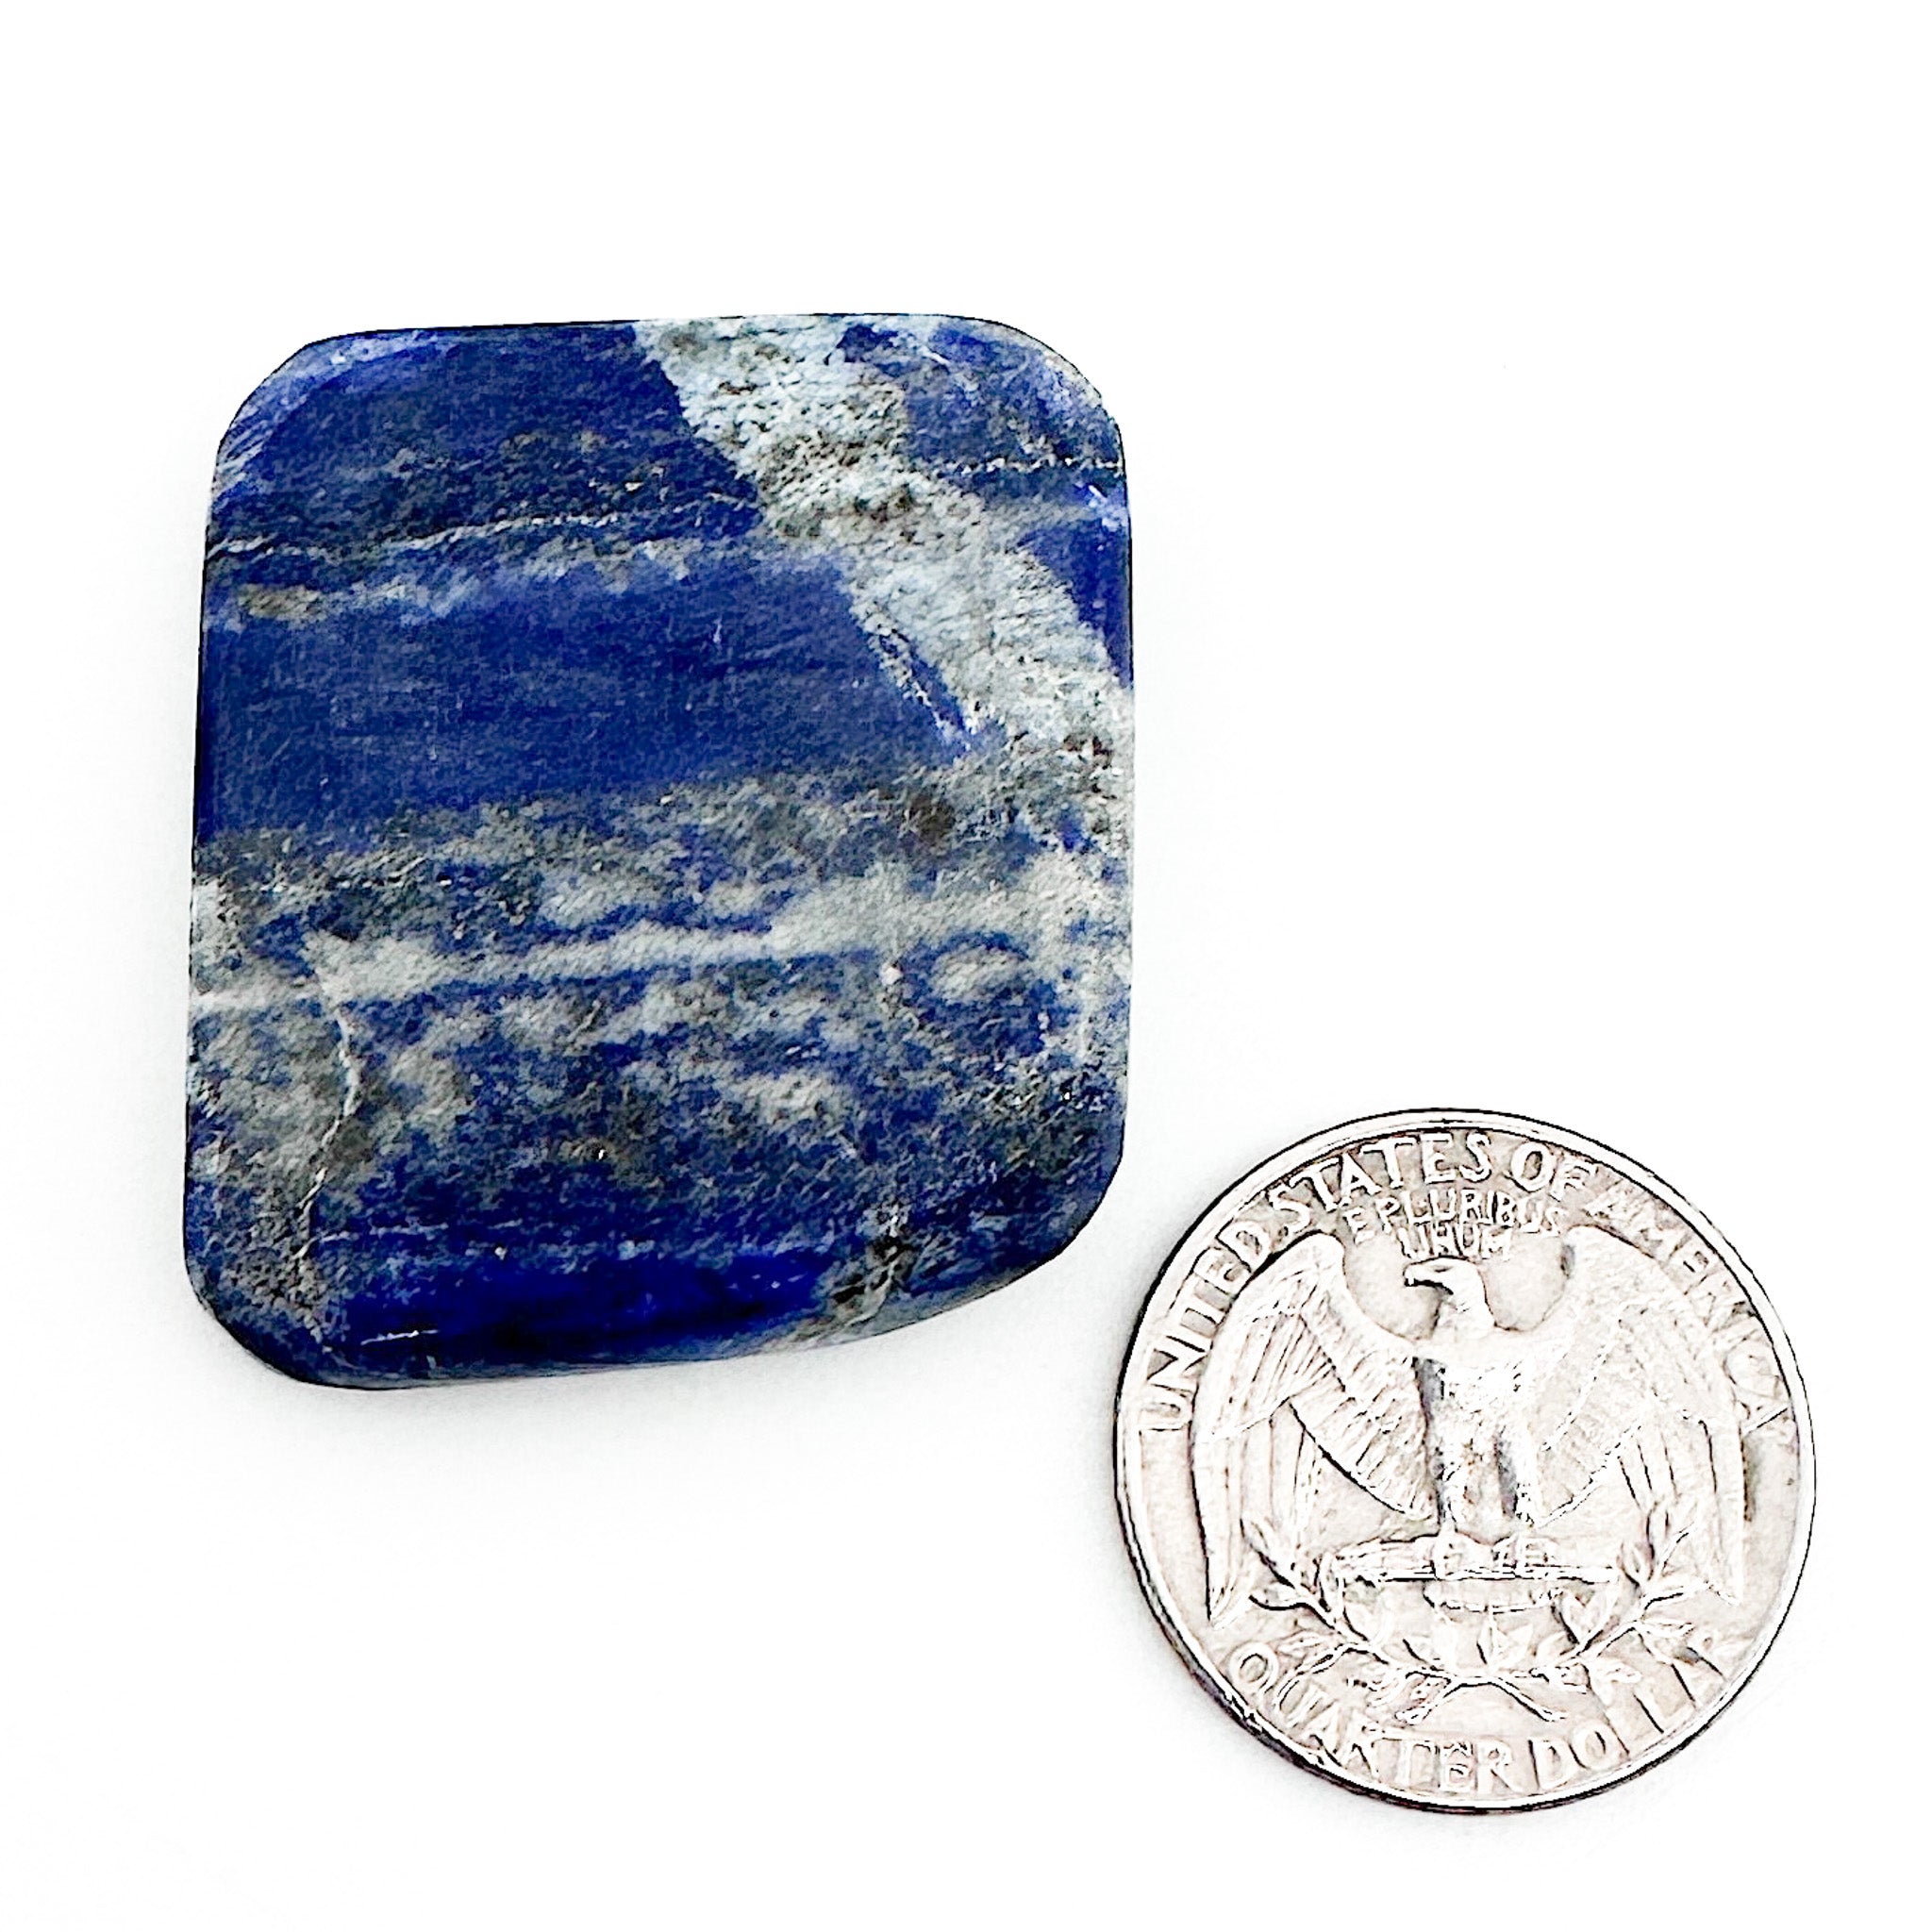 Lapis Lazuli Slices